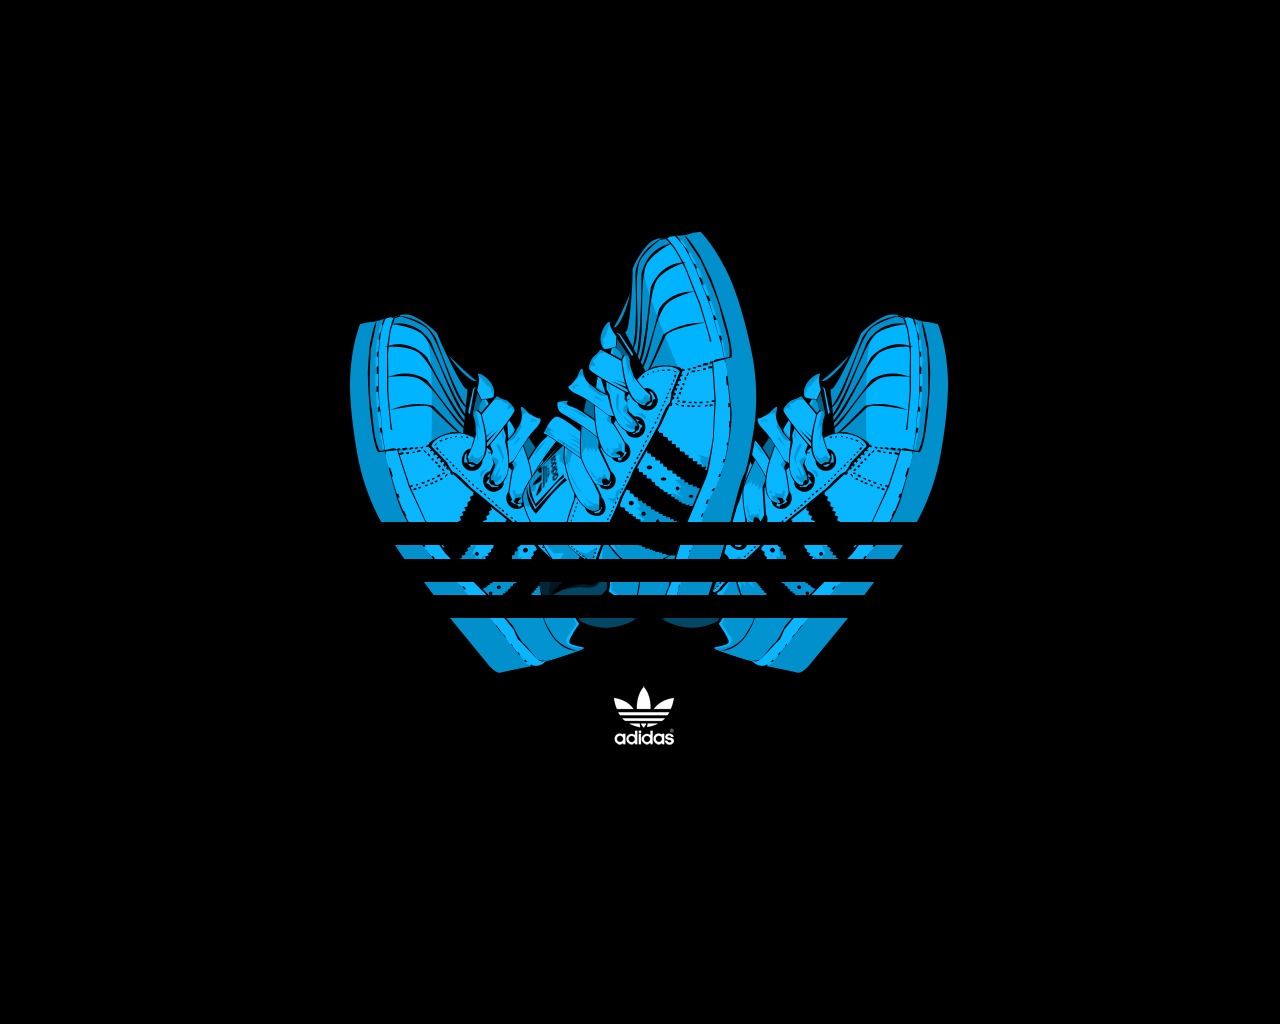 75+] Adidas Logo Wallpaper - WallpaperSafari